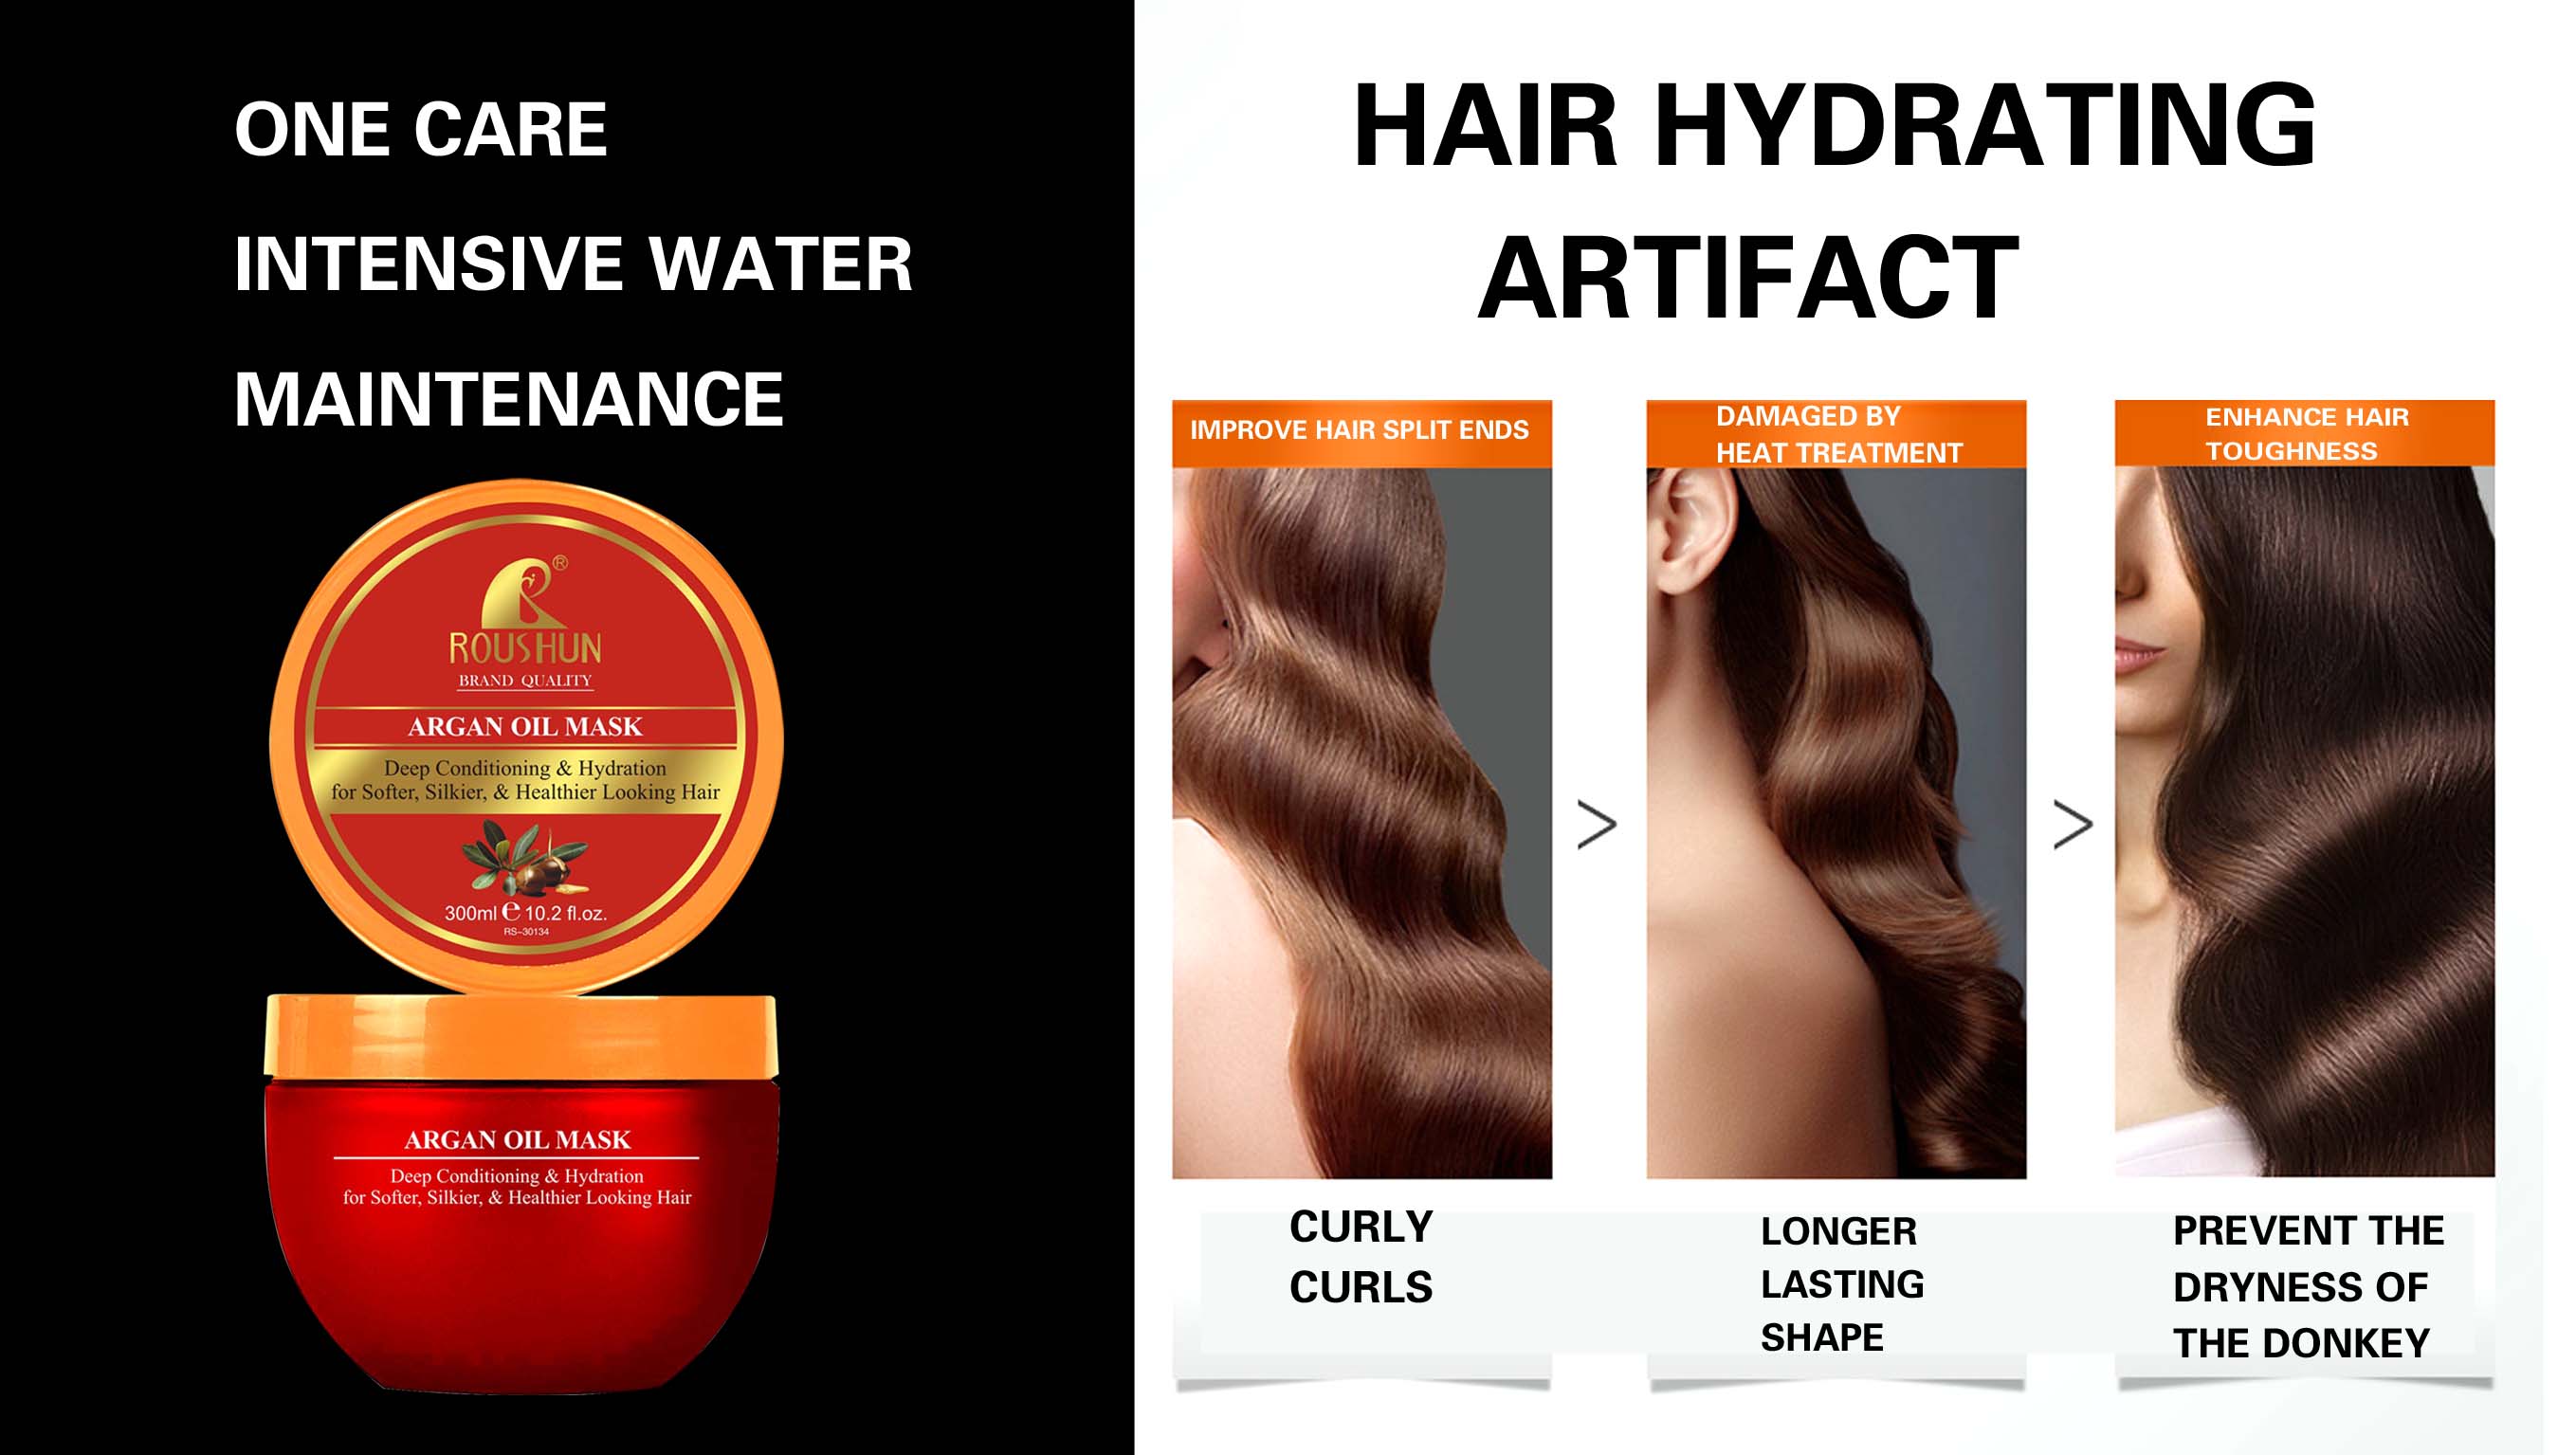 Roushun Brand Quality Argan Oil Hair Treatment Moisturizing Hair Care